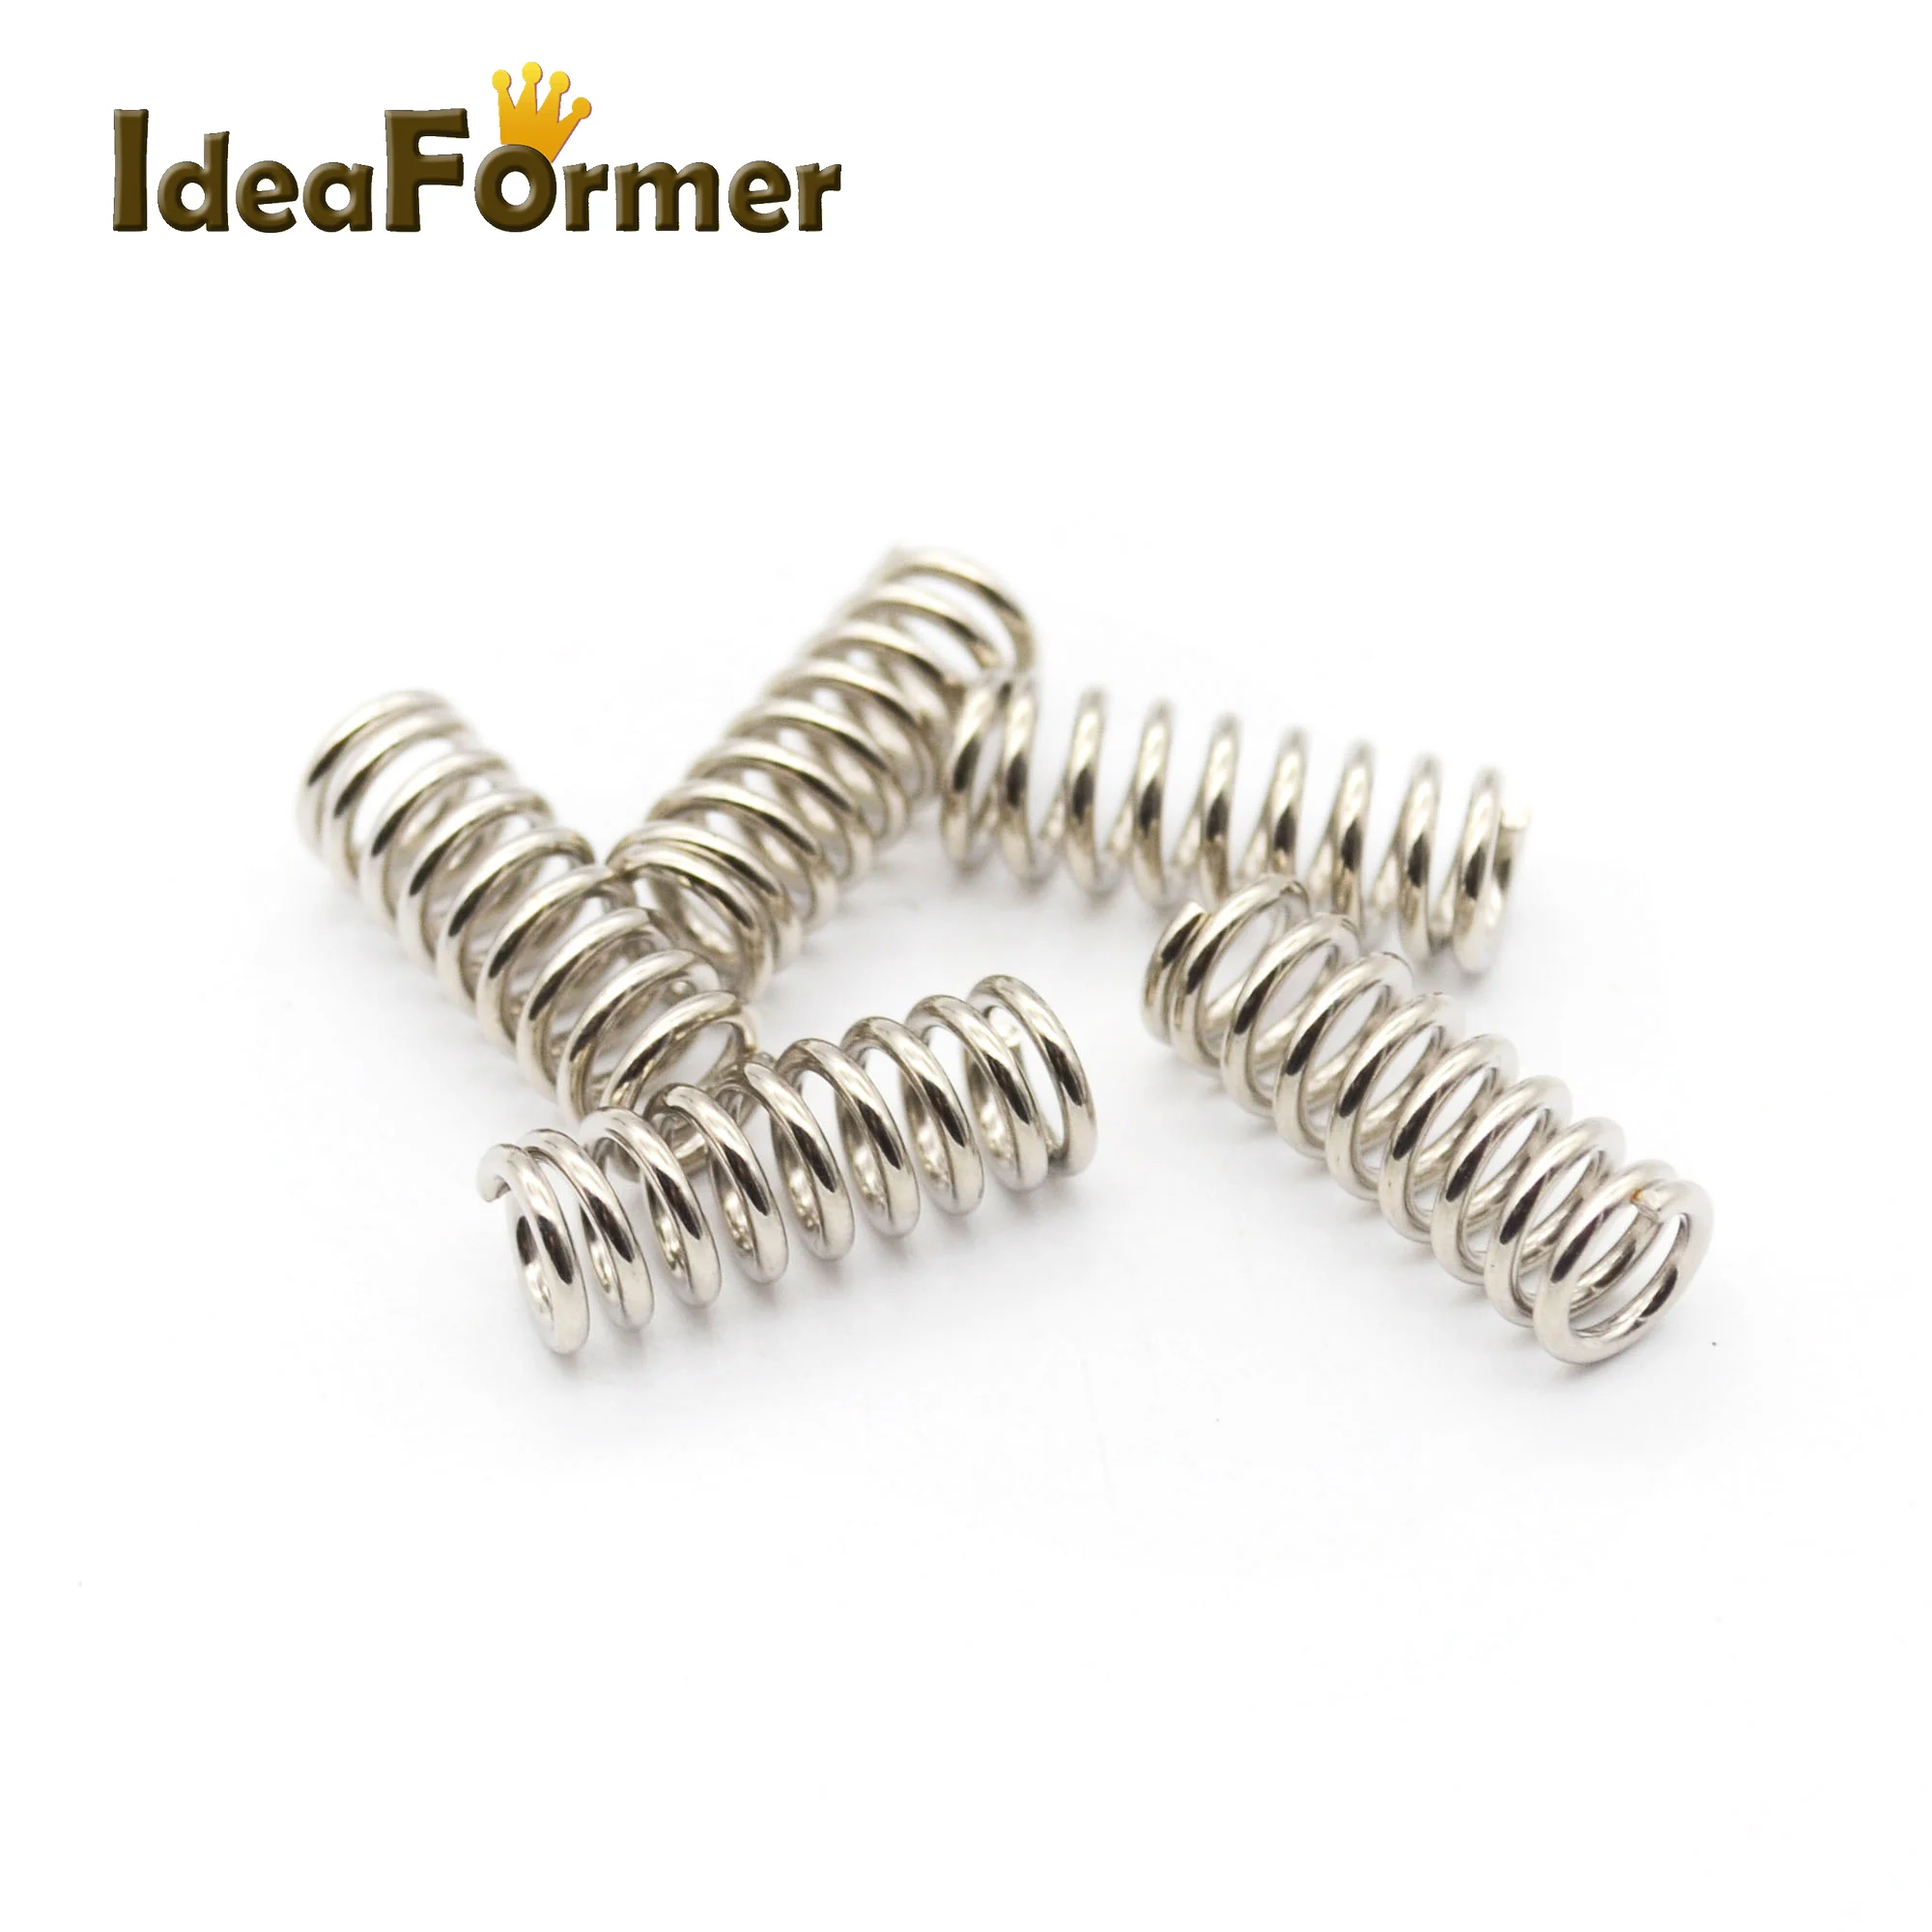 

10pcs/lot 3D printer accessory feeder spring for Ultimaker MK extruder nickel plating spring 1.2mm 20mm top quality